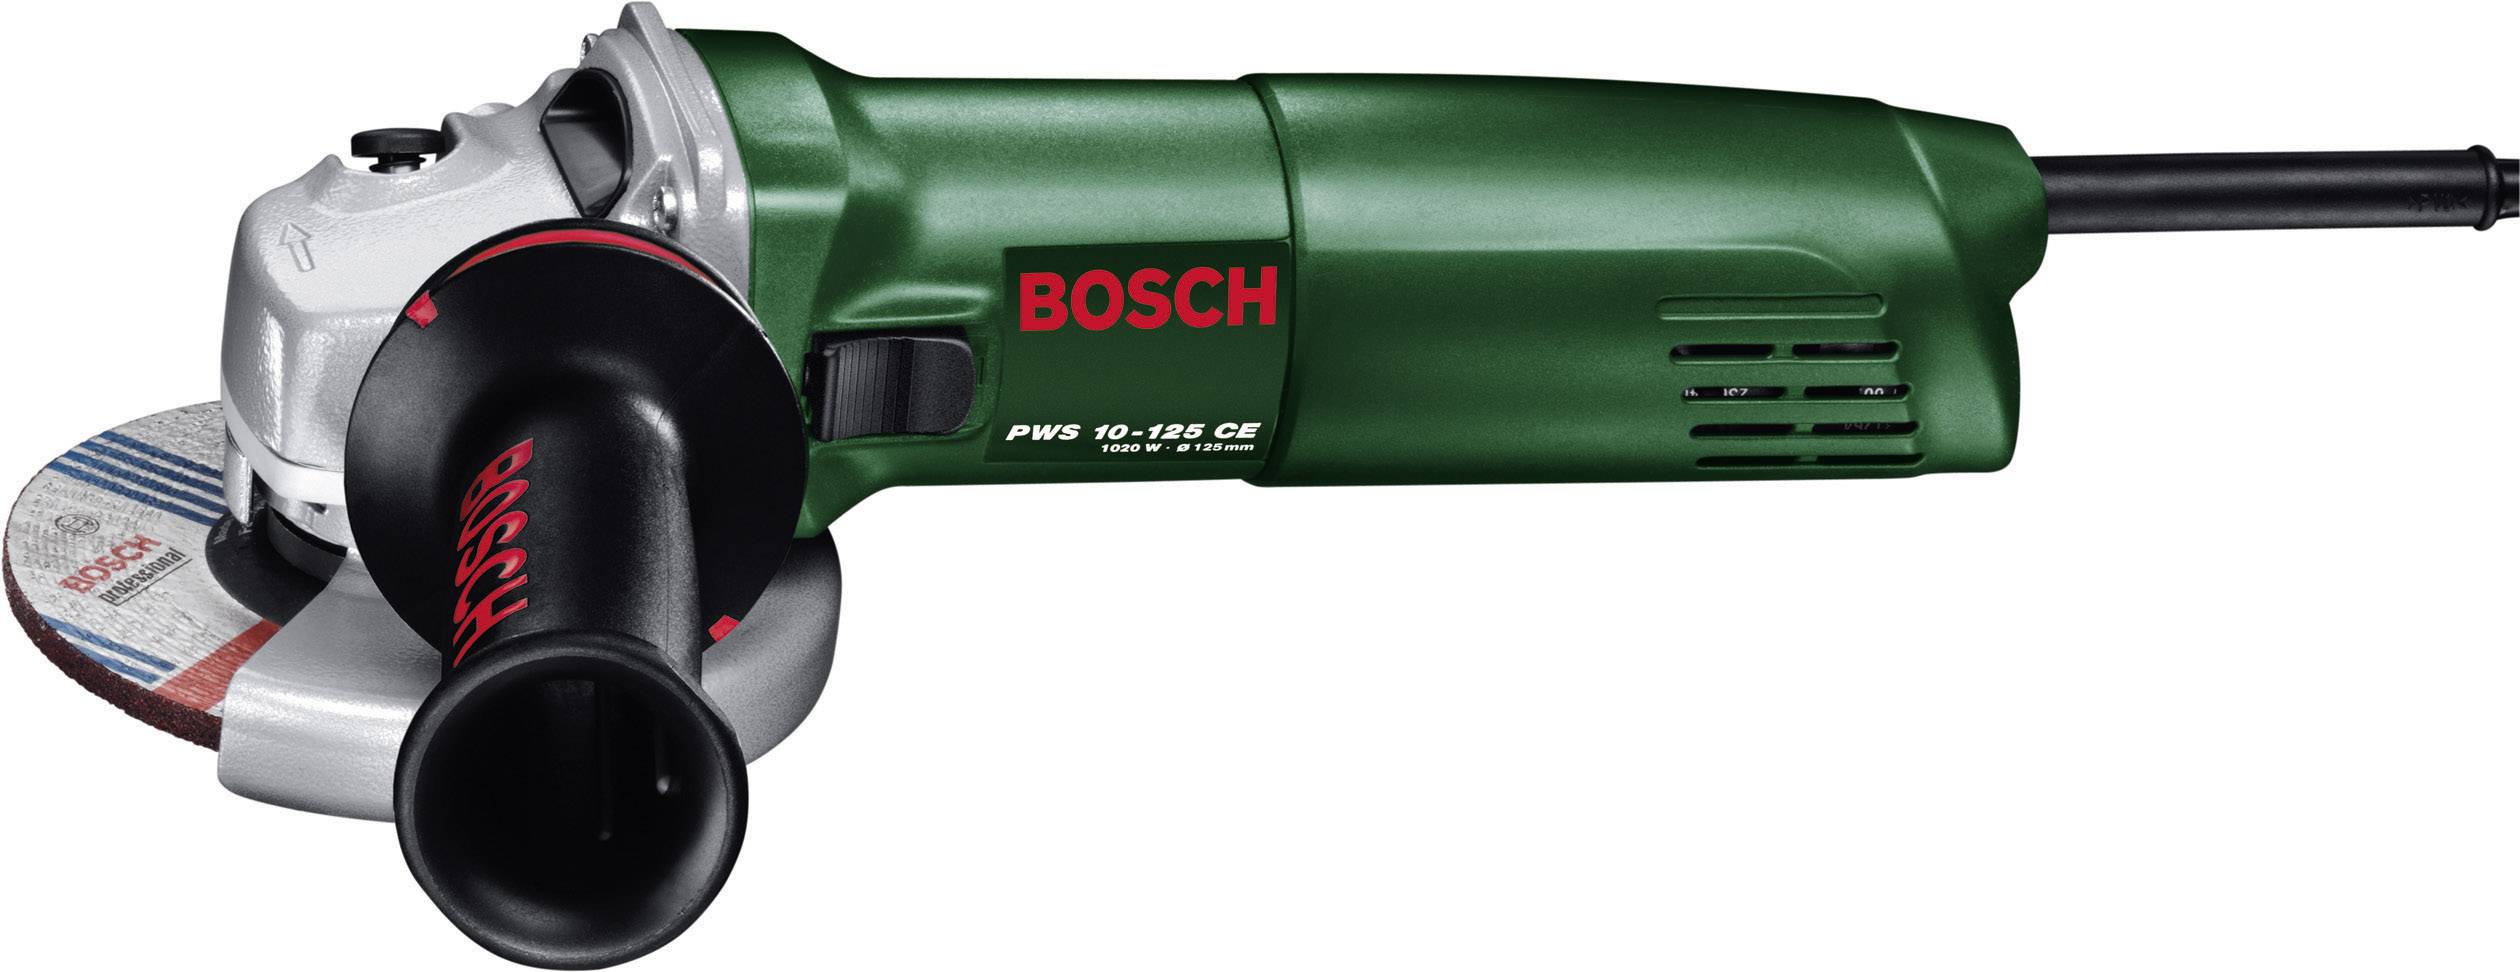 Bosch pws 650. Шлифмашинка Bosch 40х150. Угловая шлифмашина Bosch PWS 8-125 ce. Ручка для Bosch PWS 8-125 ce. Bosch PWS 650-125 06034110r0.